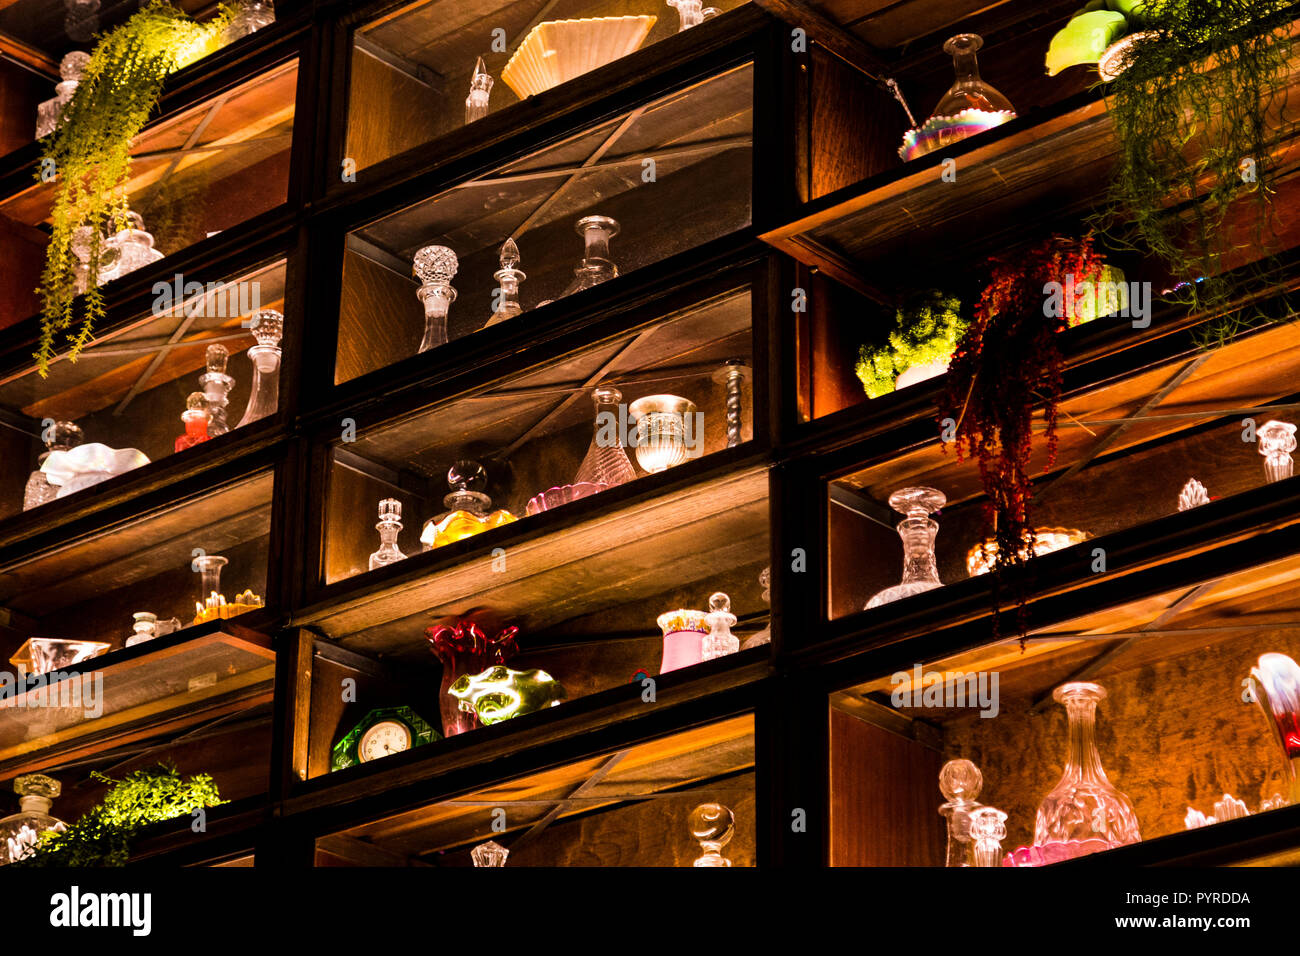 Detail of decorative bar shelves at Rake's Cafe Bar at the Andaz Hotel, London, UK Stock Photo